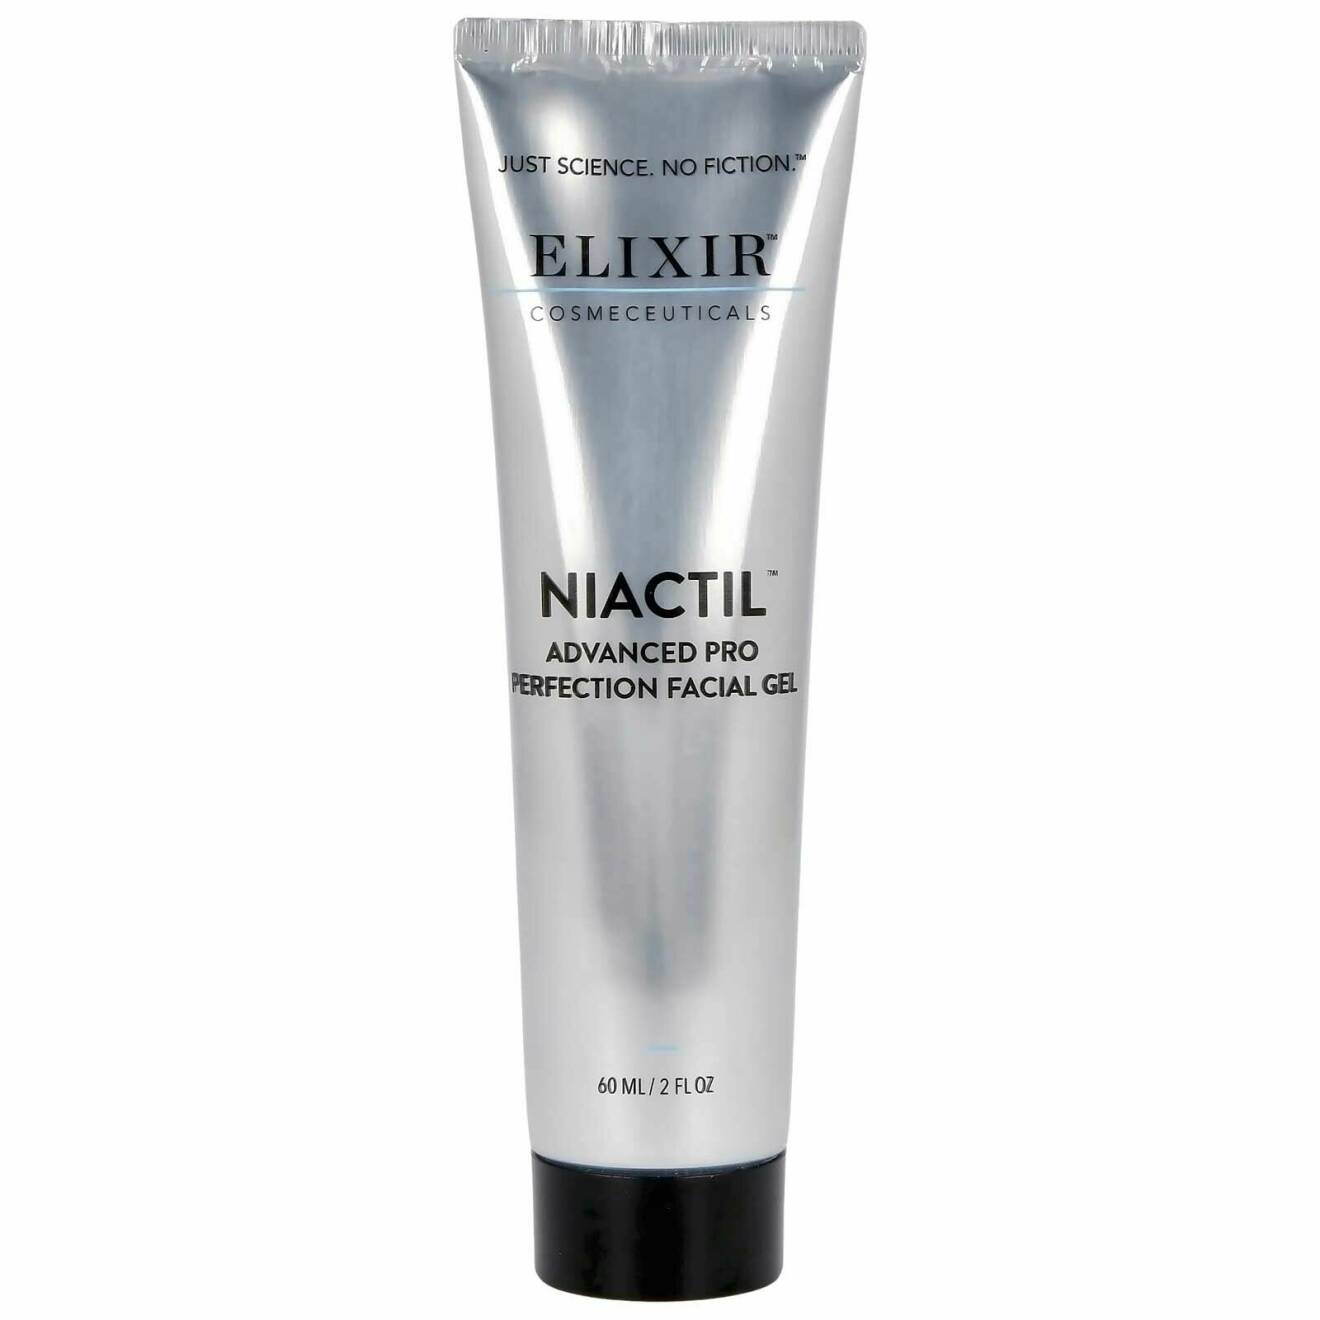 Niactil Advanced Pro från Elixir Cosme­cuticals.